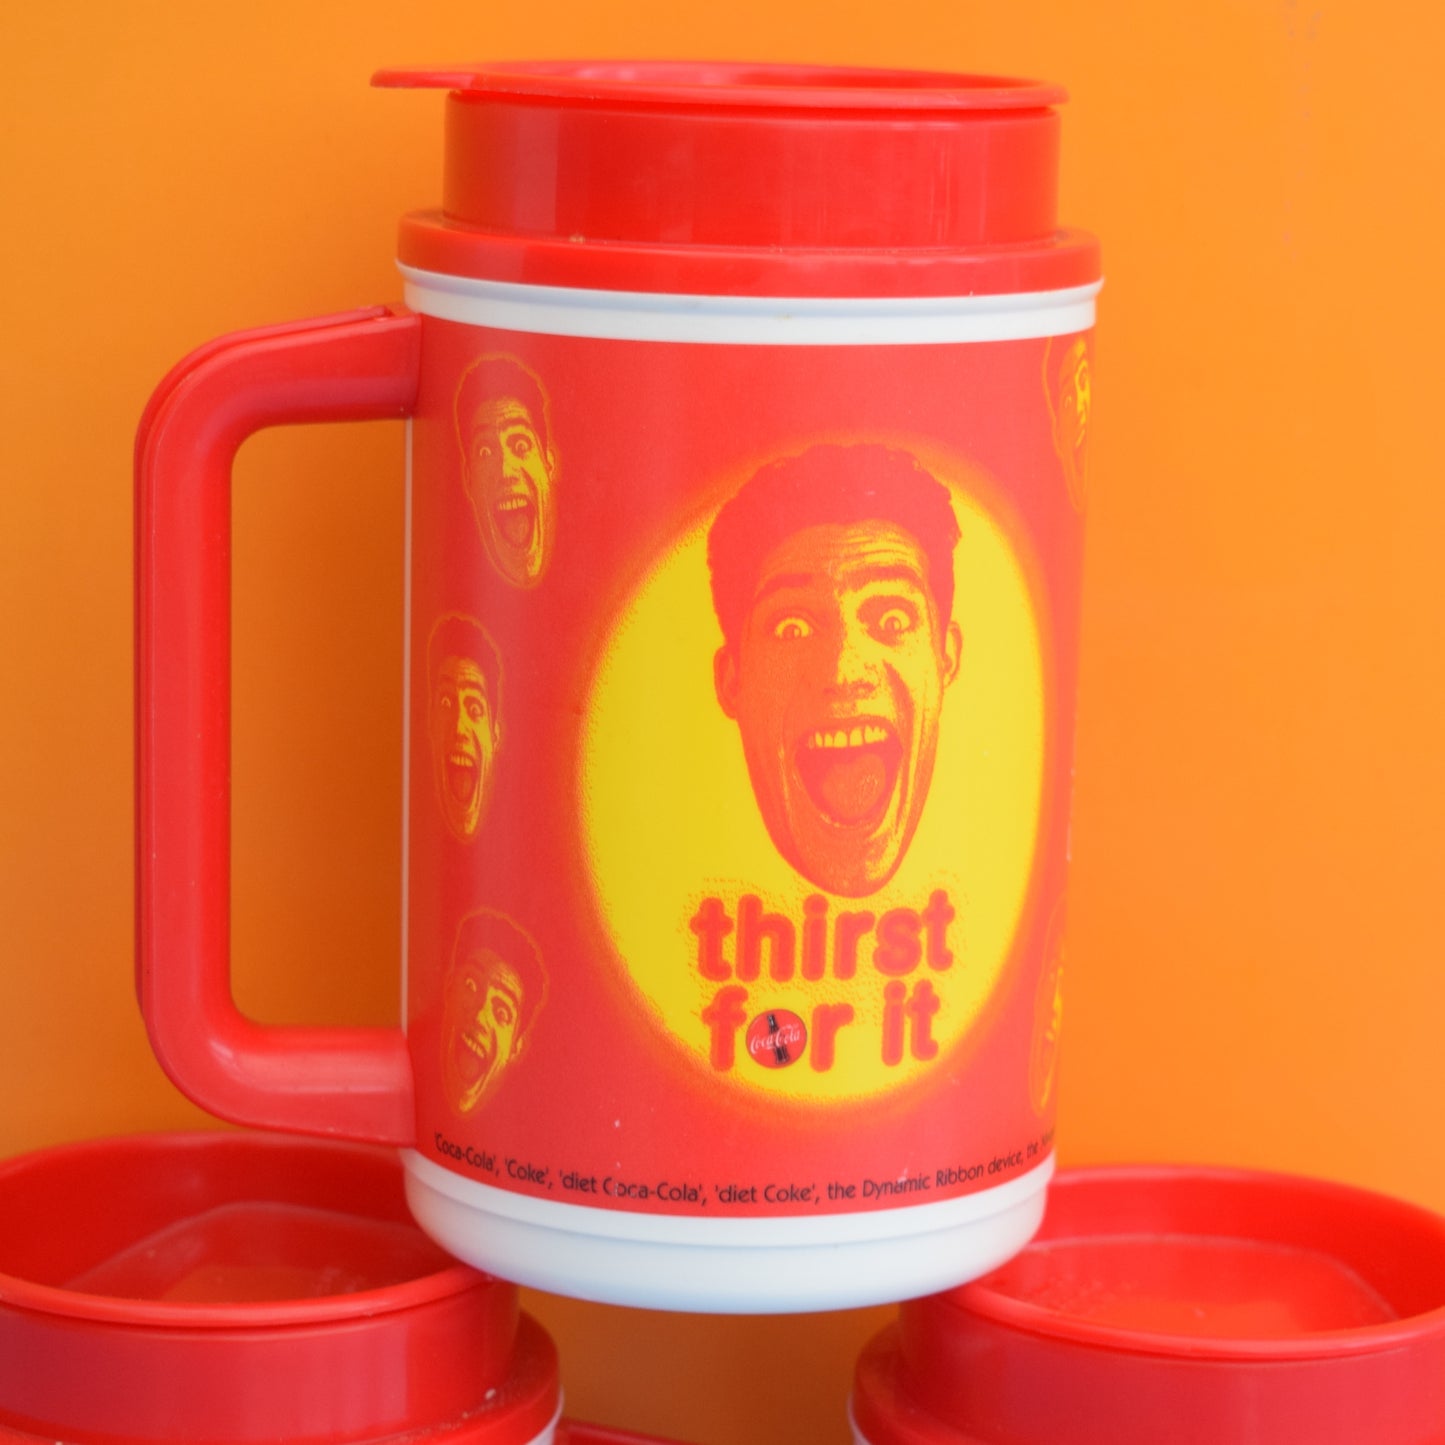 Vintage 1990s Thermos Mug - Coke x3